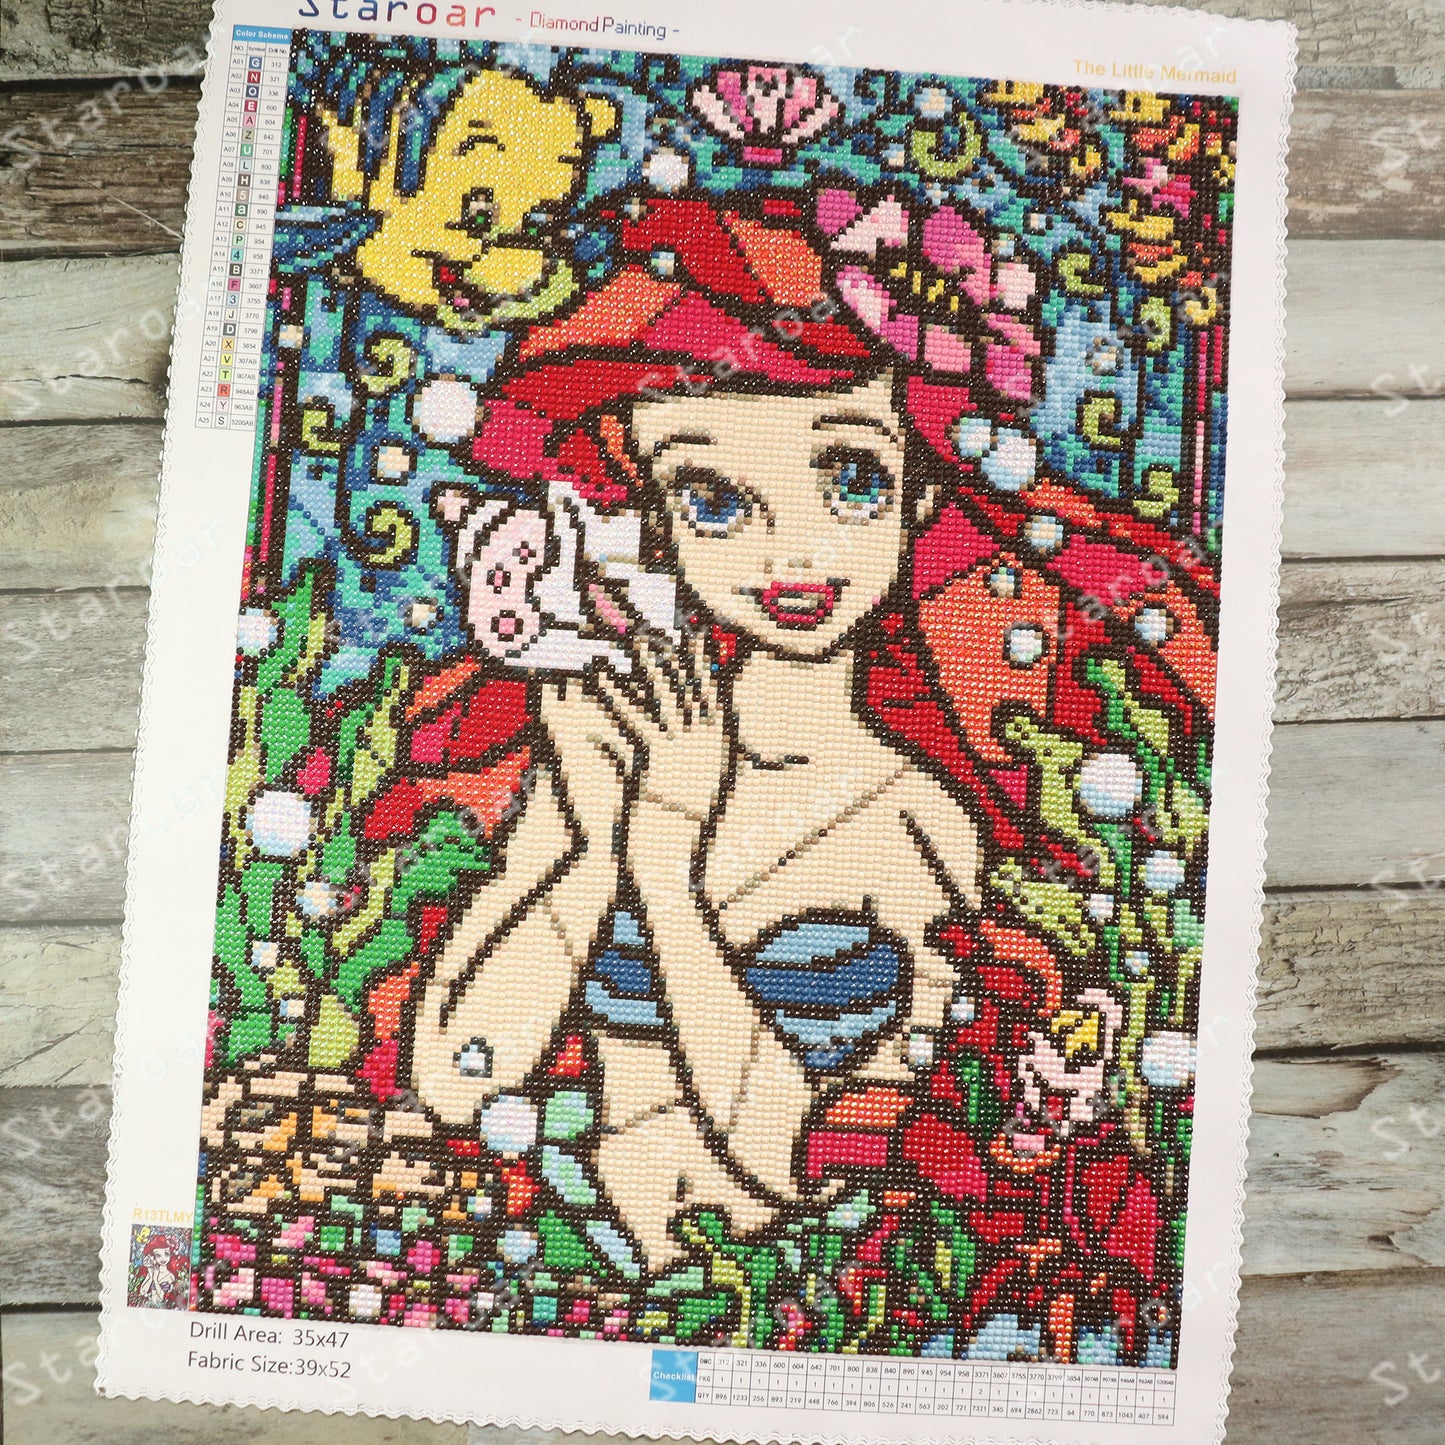 staroar diamond painting canvas art the little mermaid Disney princess